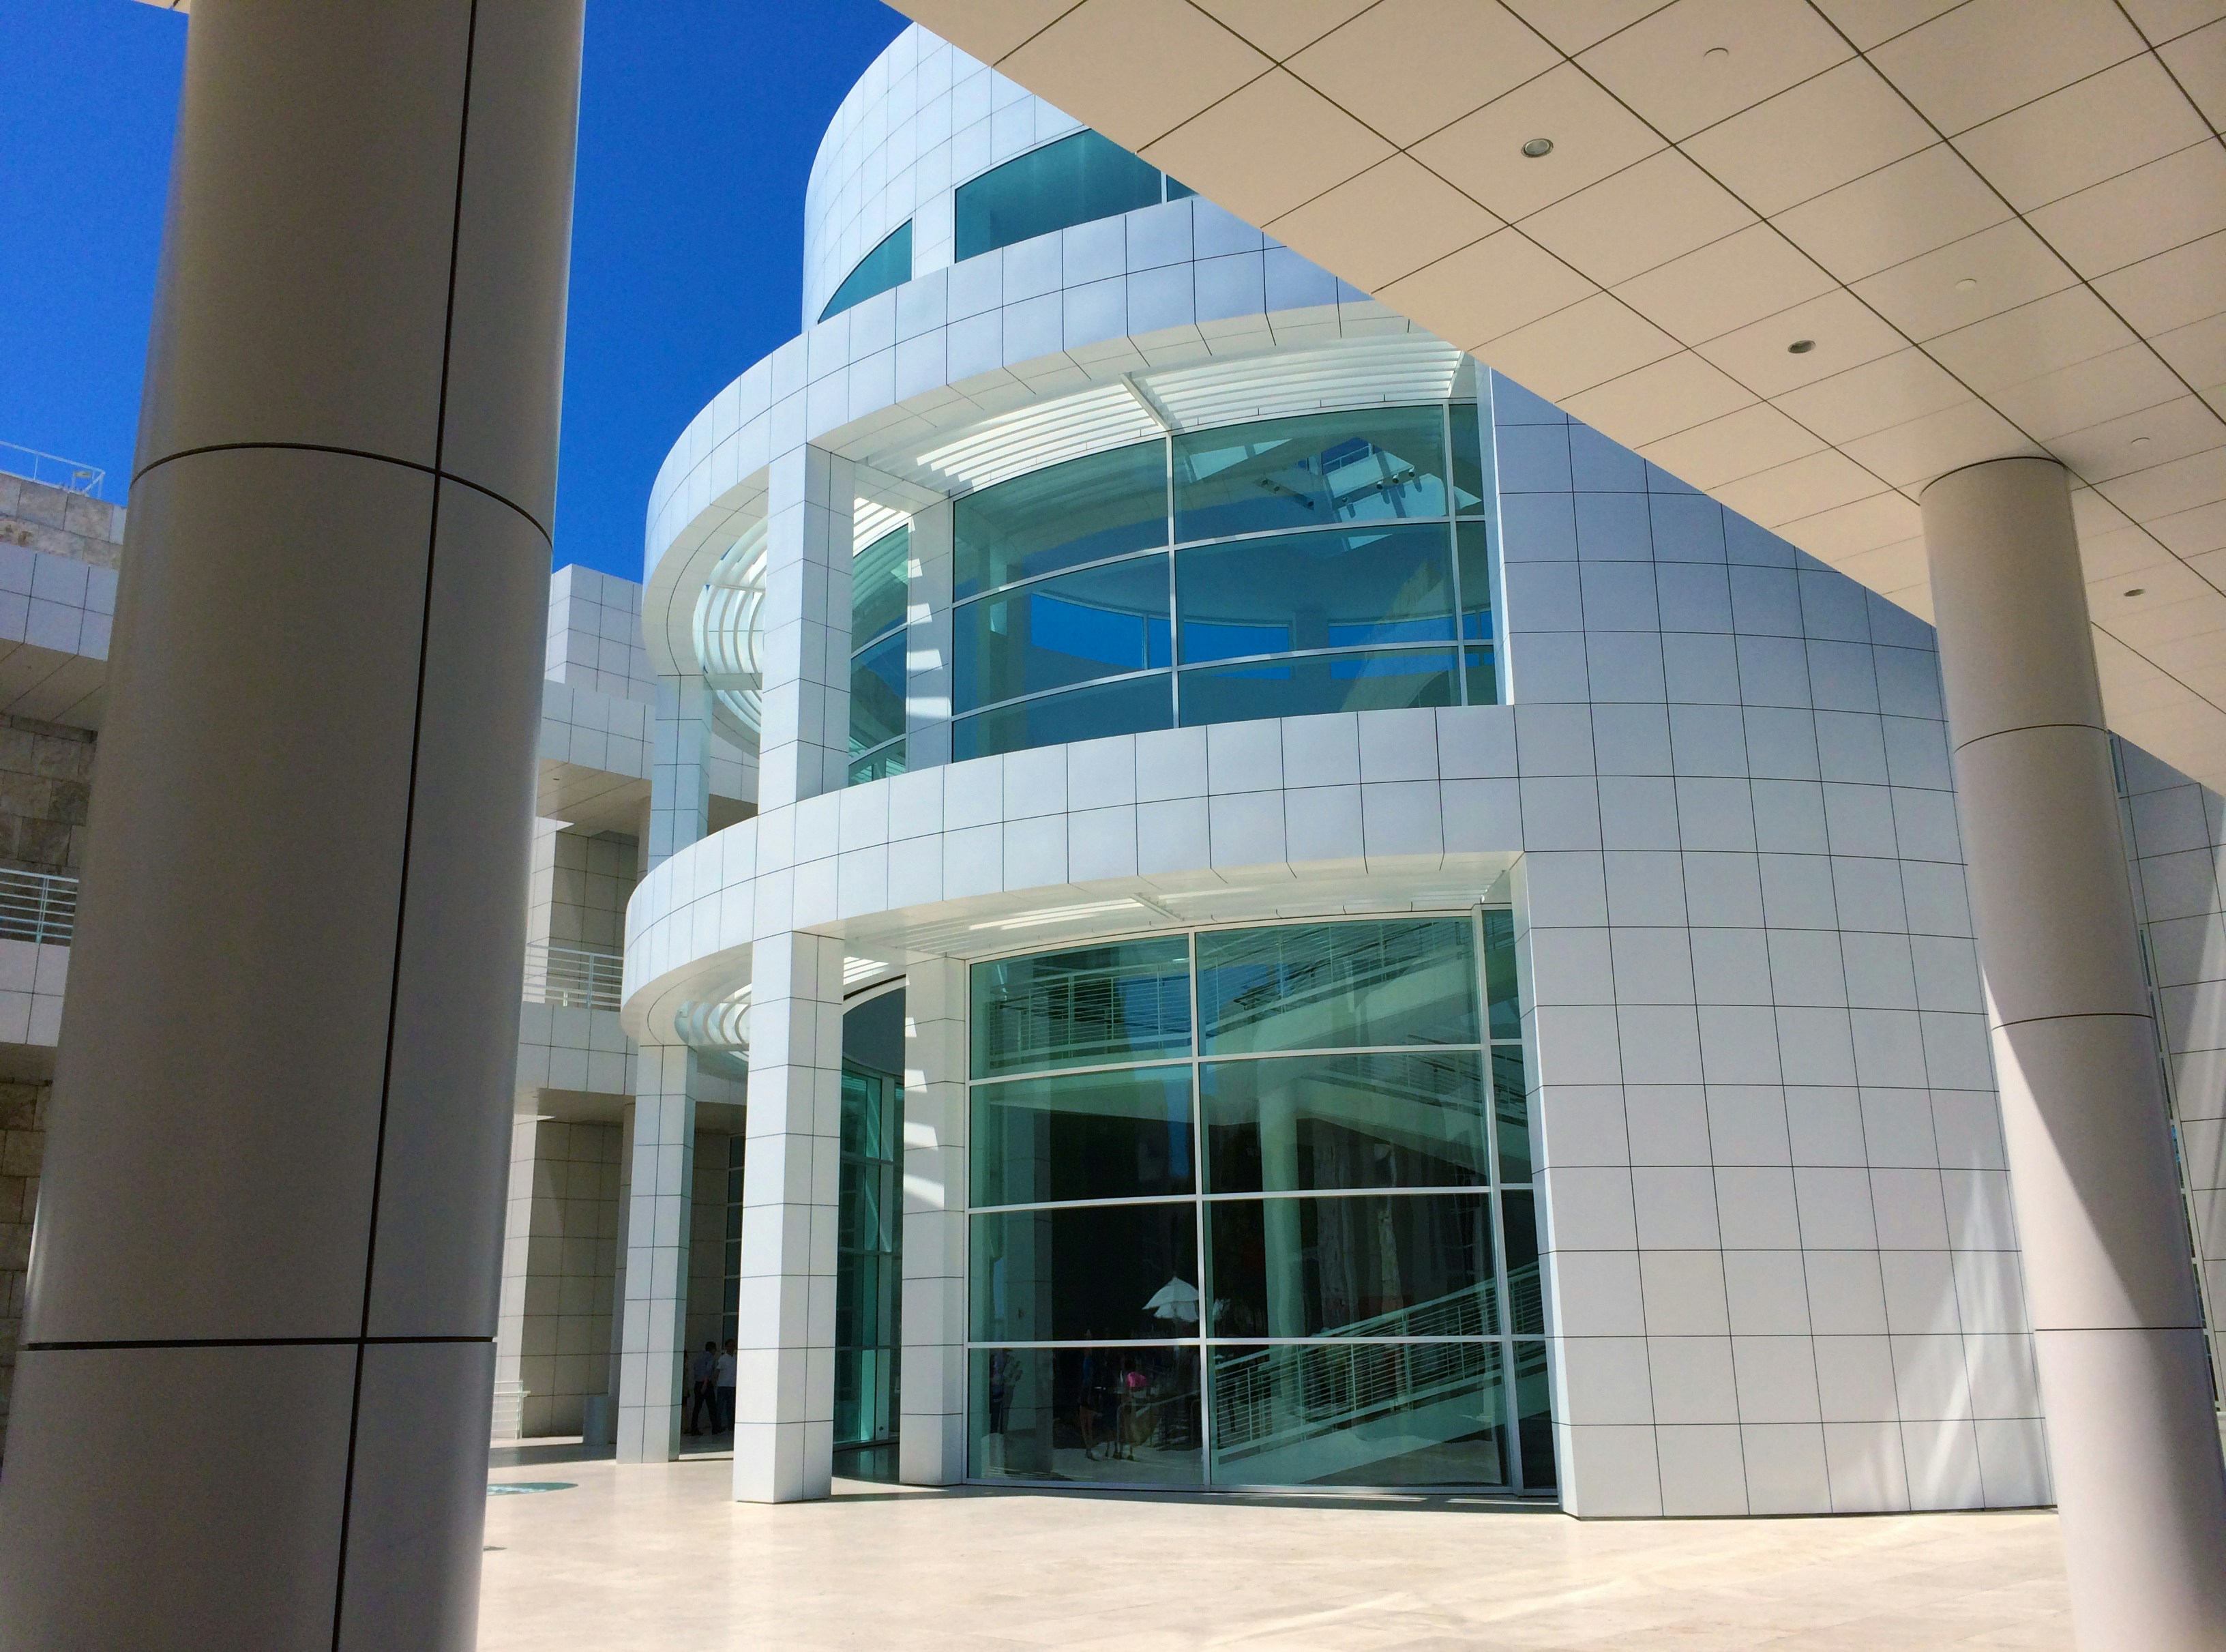 Building in Getty Museum in Los Angeles, California.